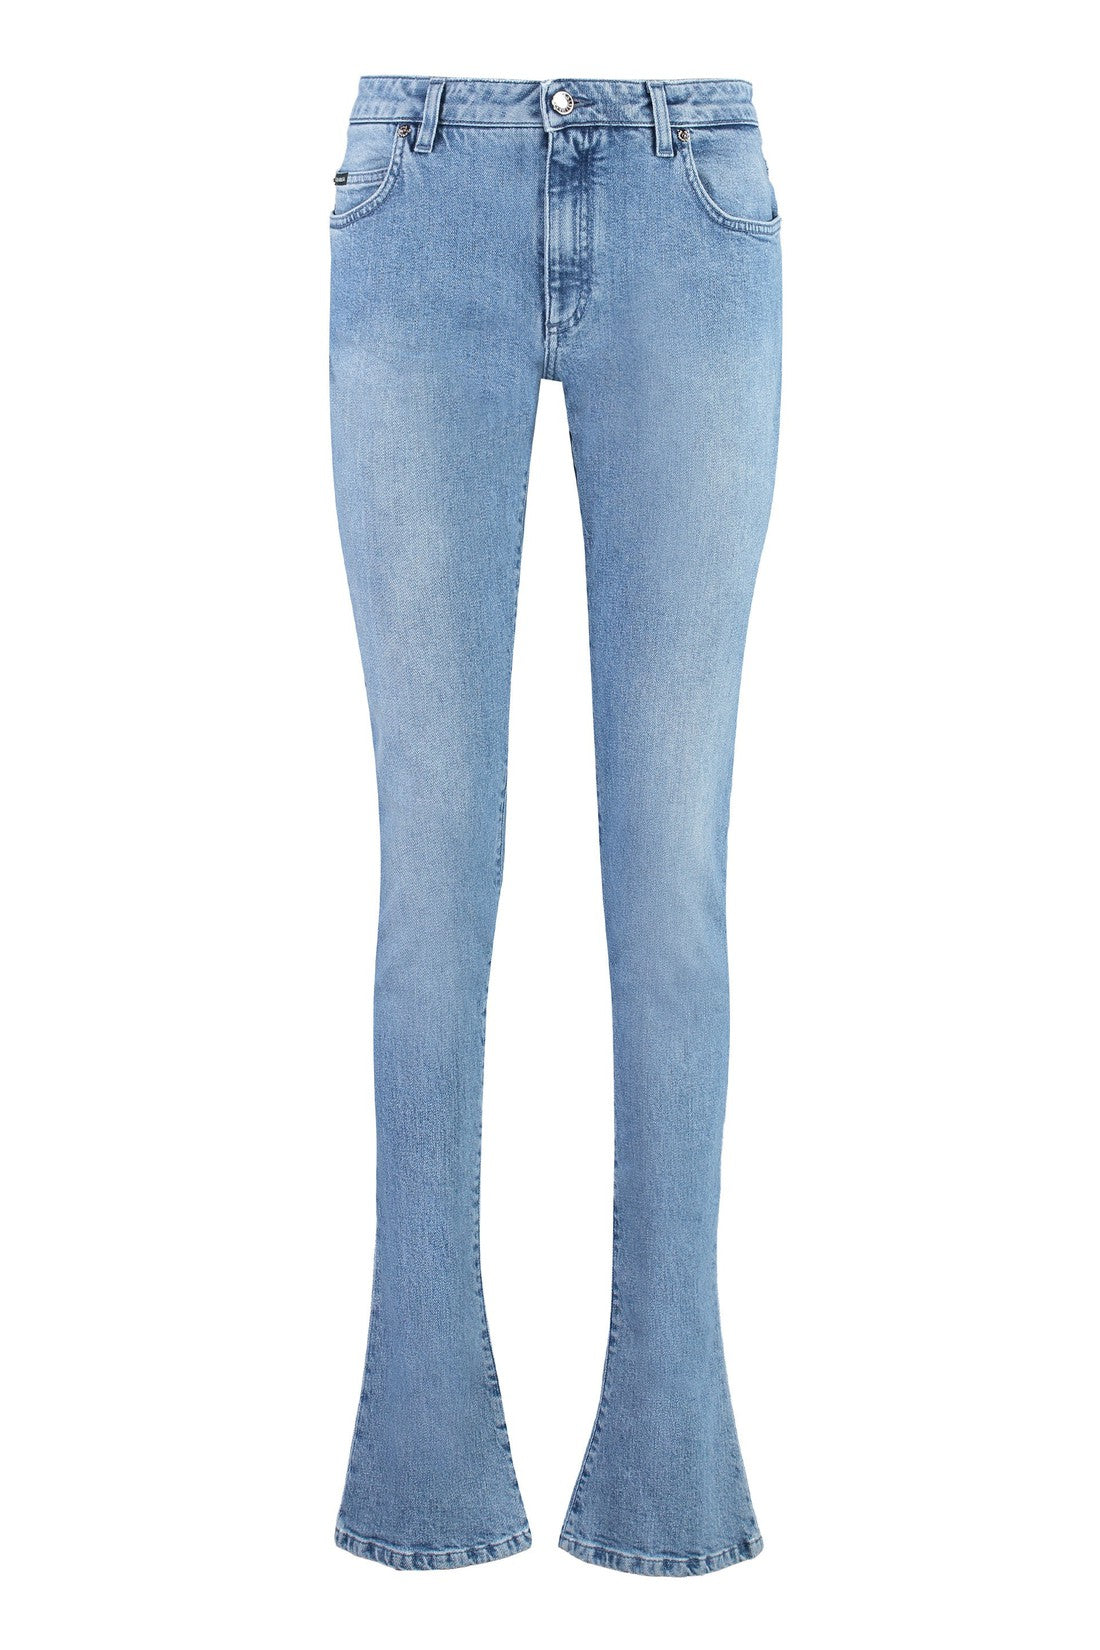 Dolce & Gabbana-OUTLET-SALE-5-pocket jeans-ARCHIVIST